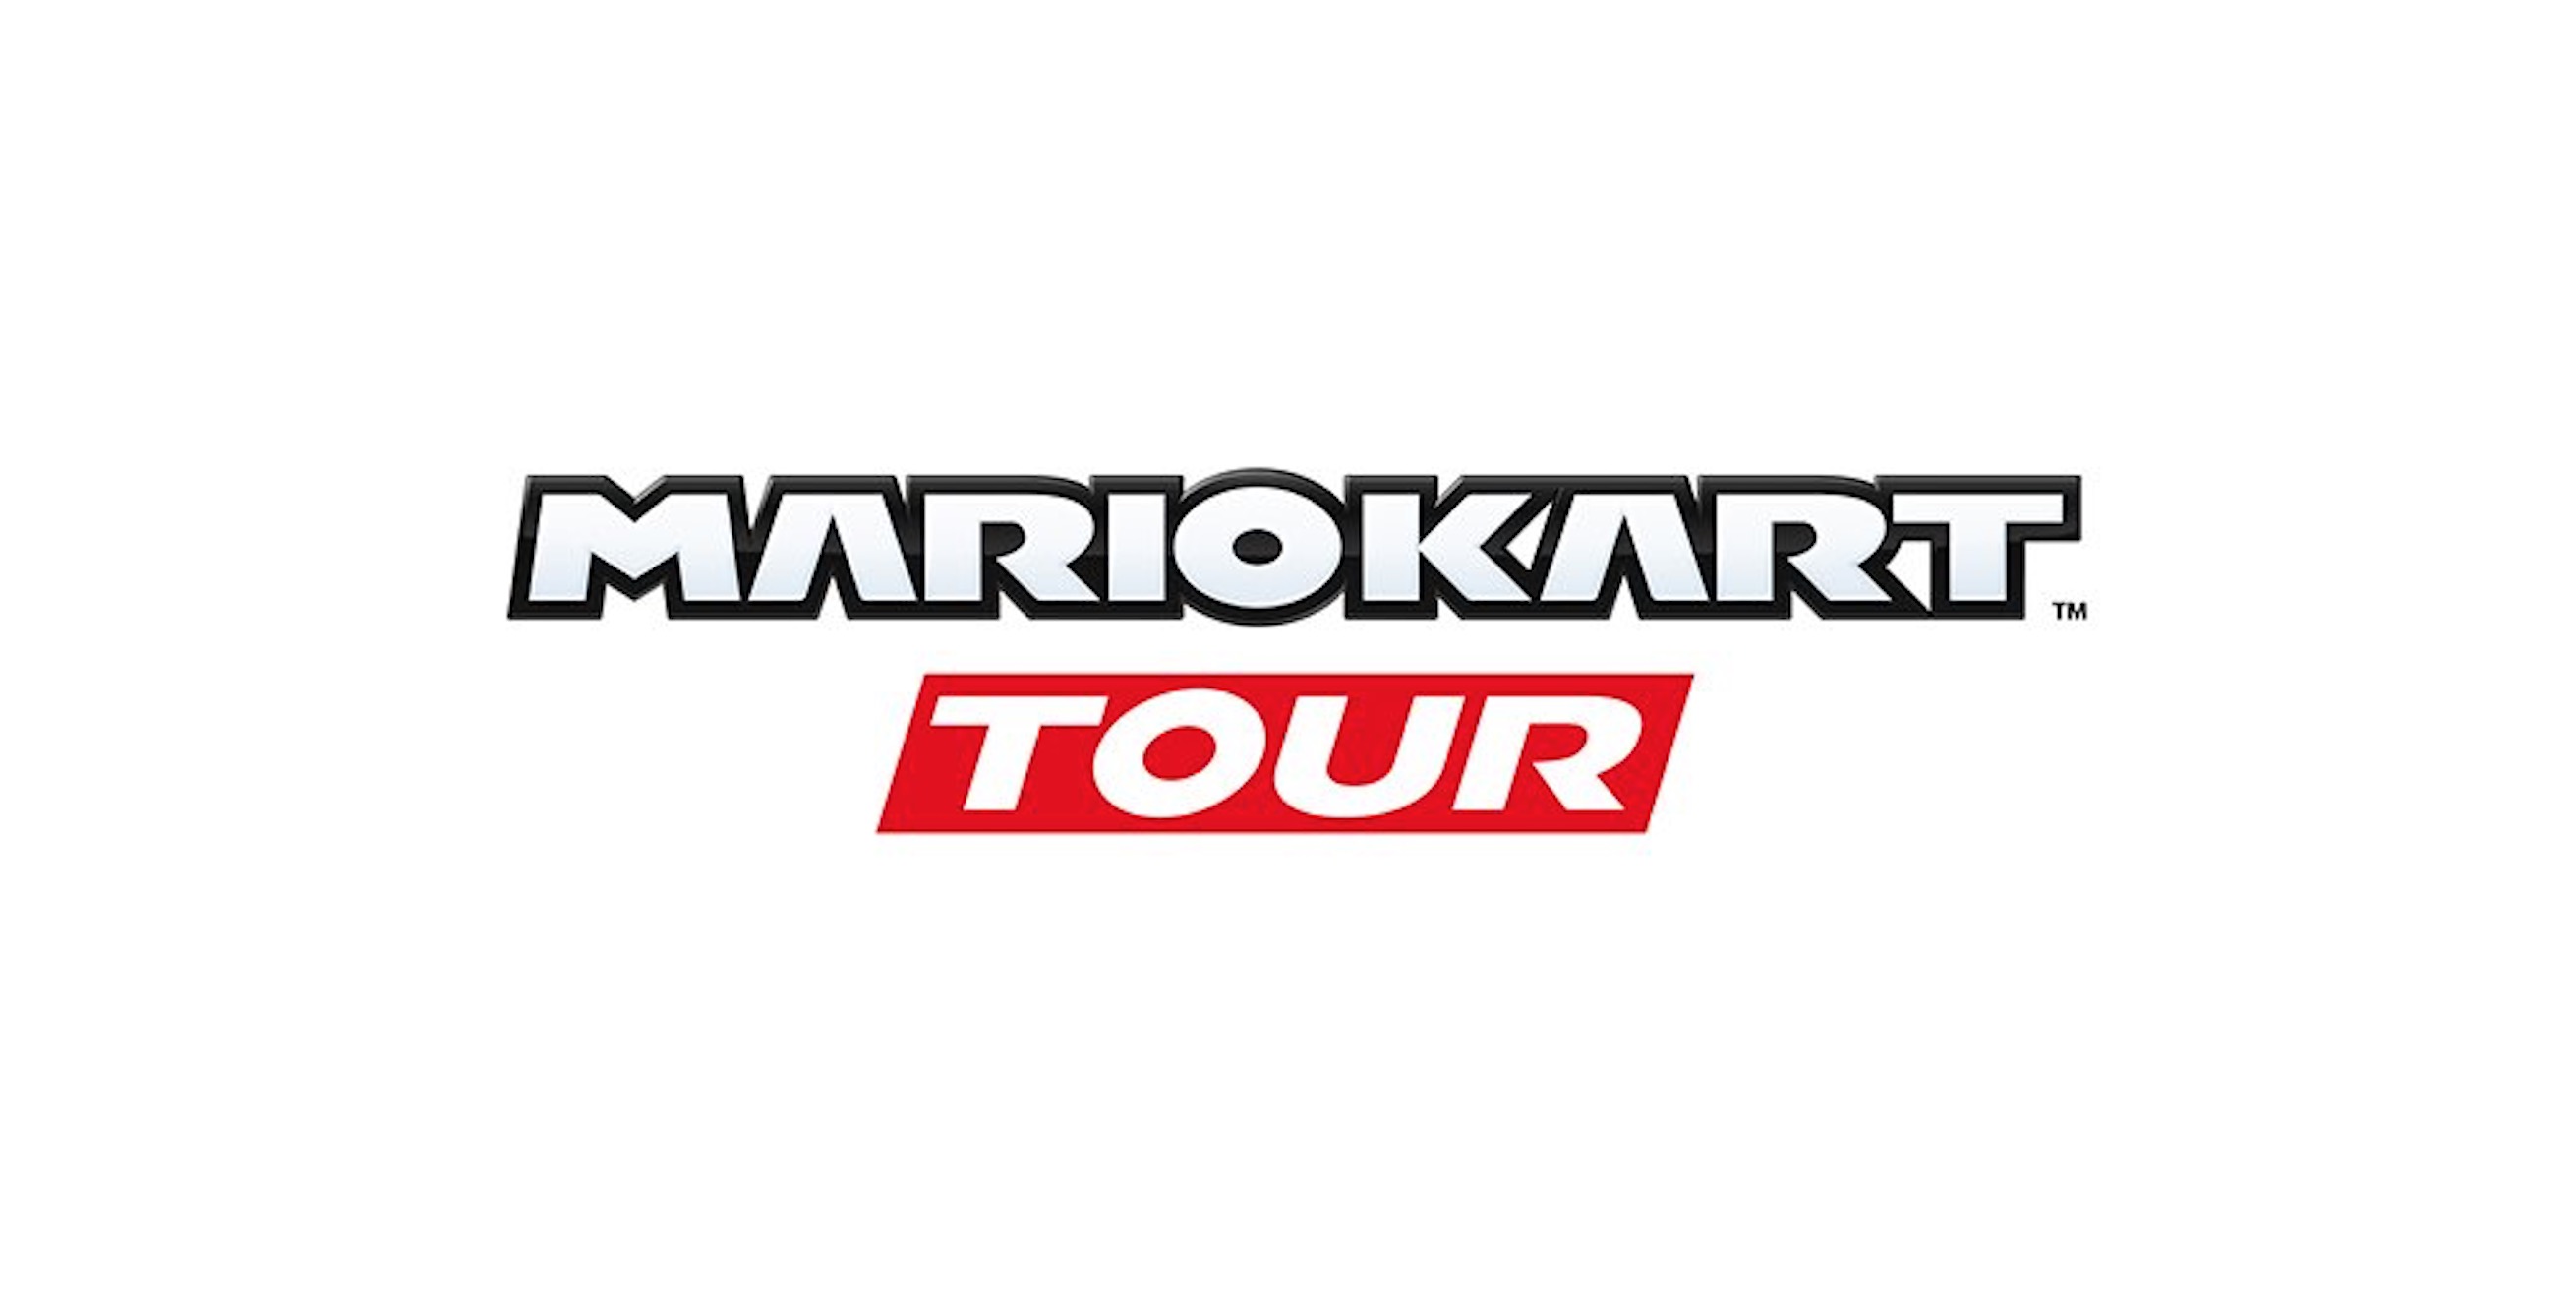 Mario Kart Tour is Nintendo's biggest mobile hit yet